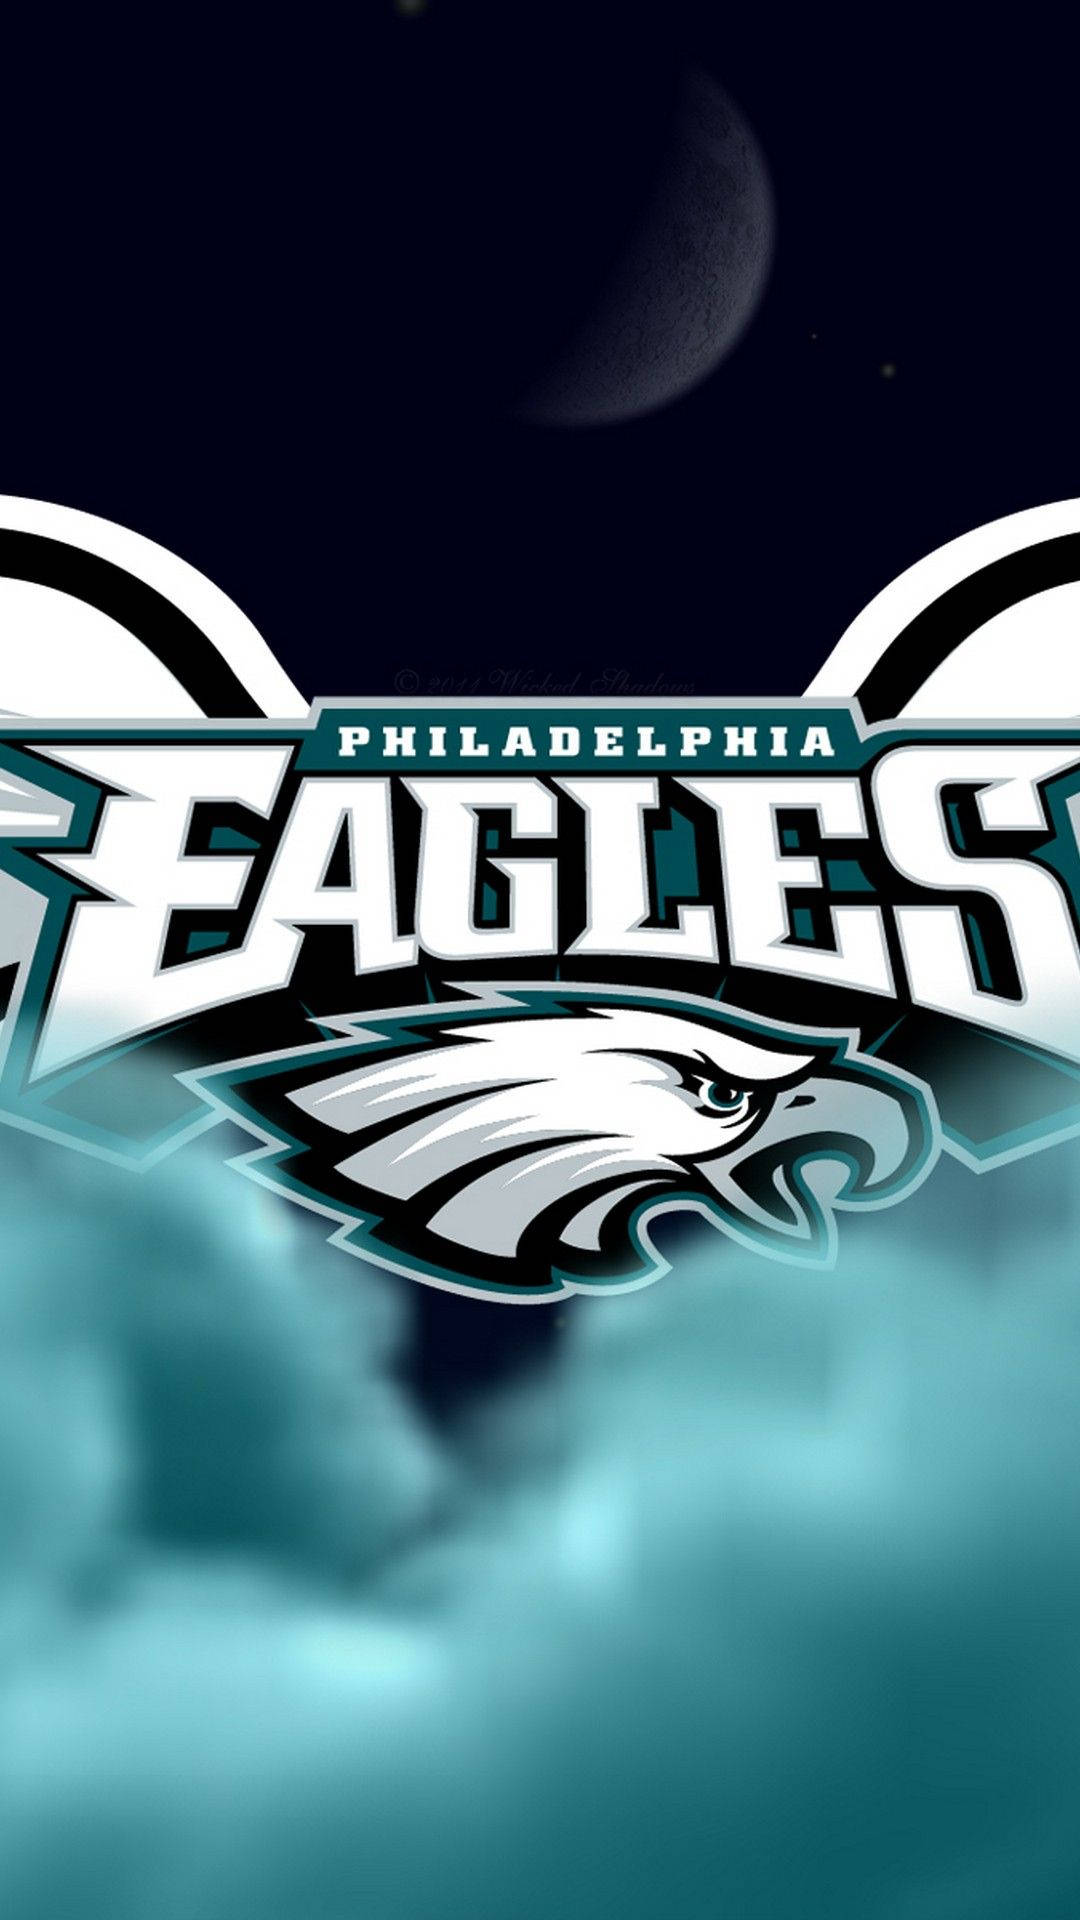 Philadelphia Eagles Logo At Night Wallpaper